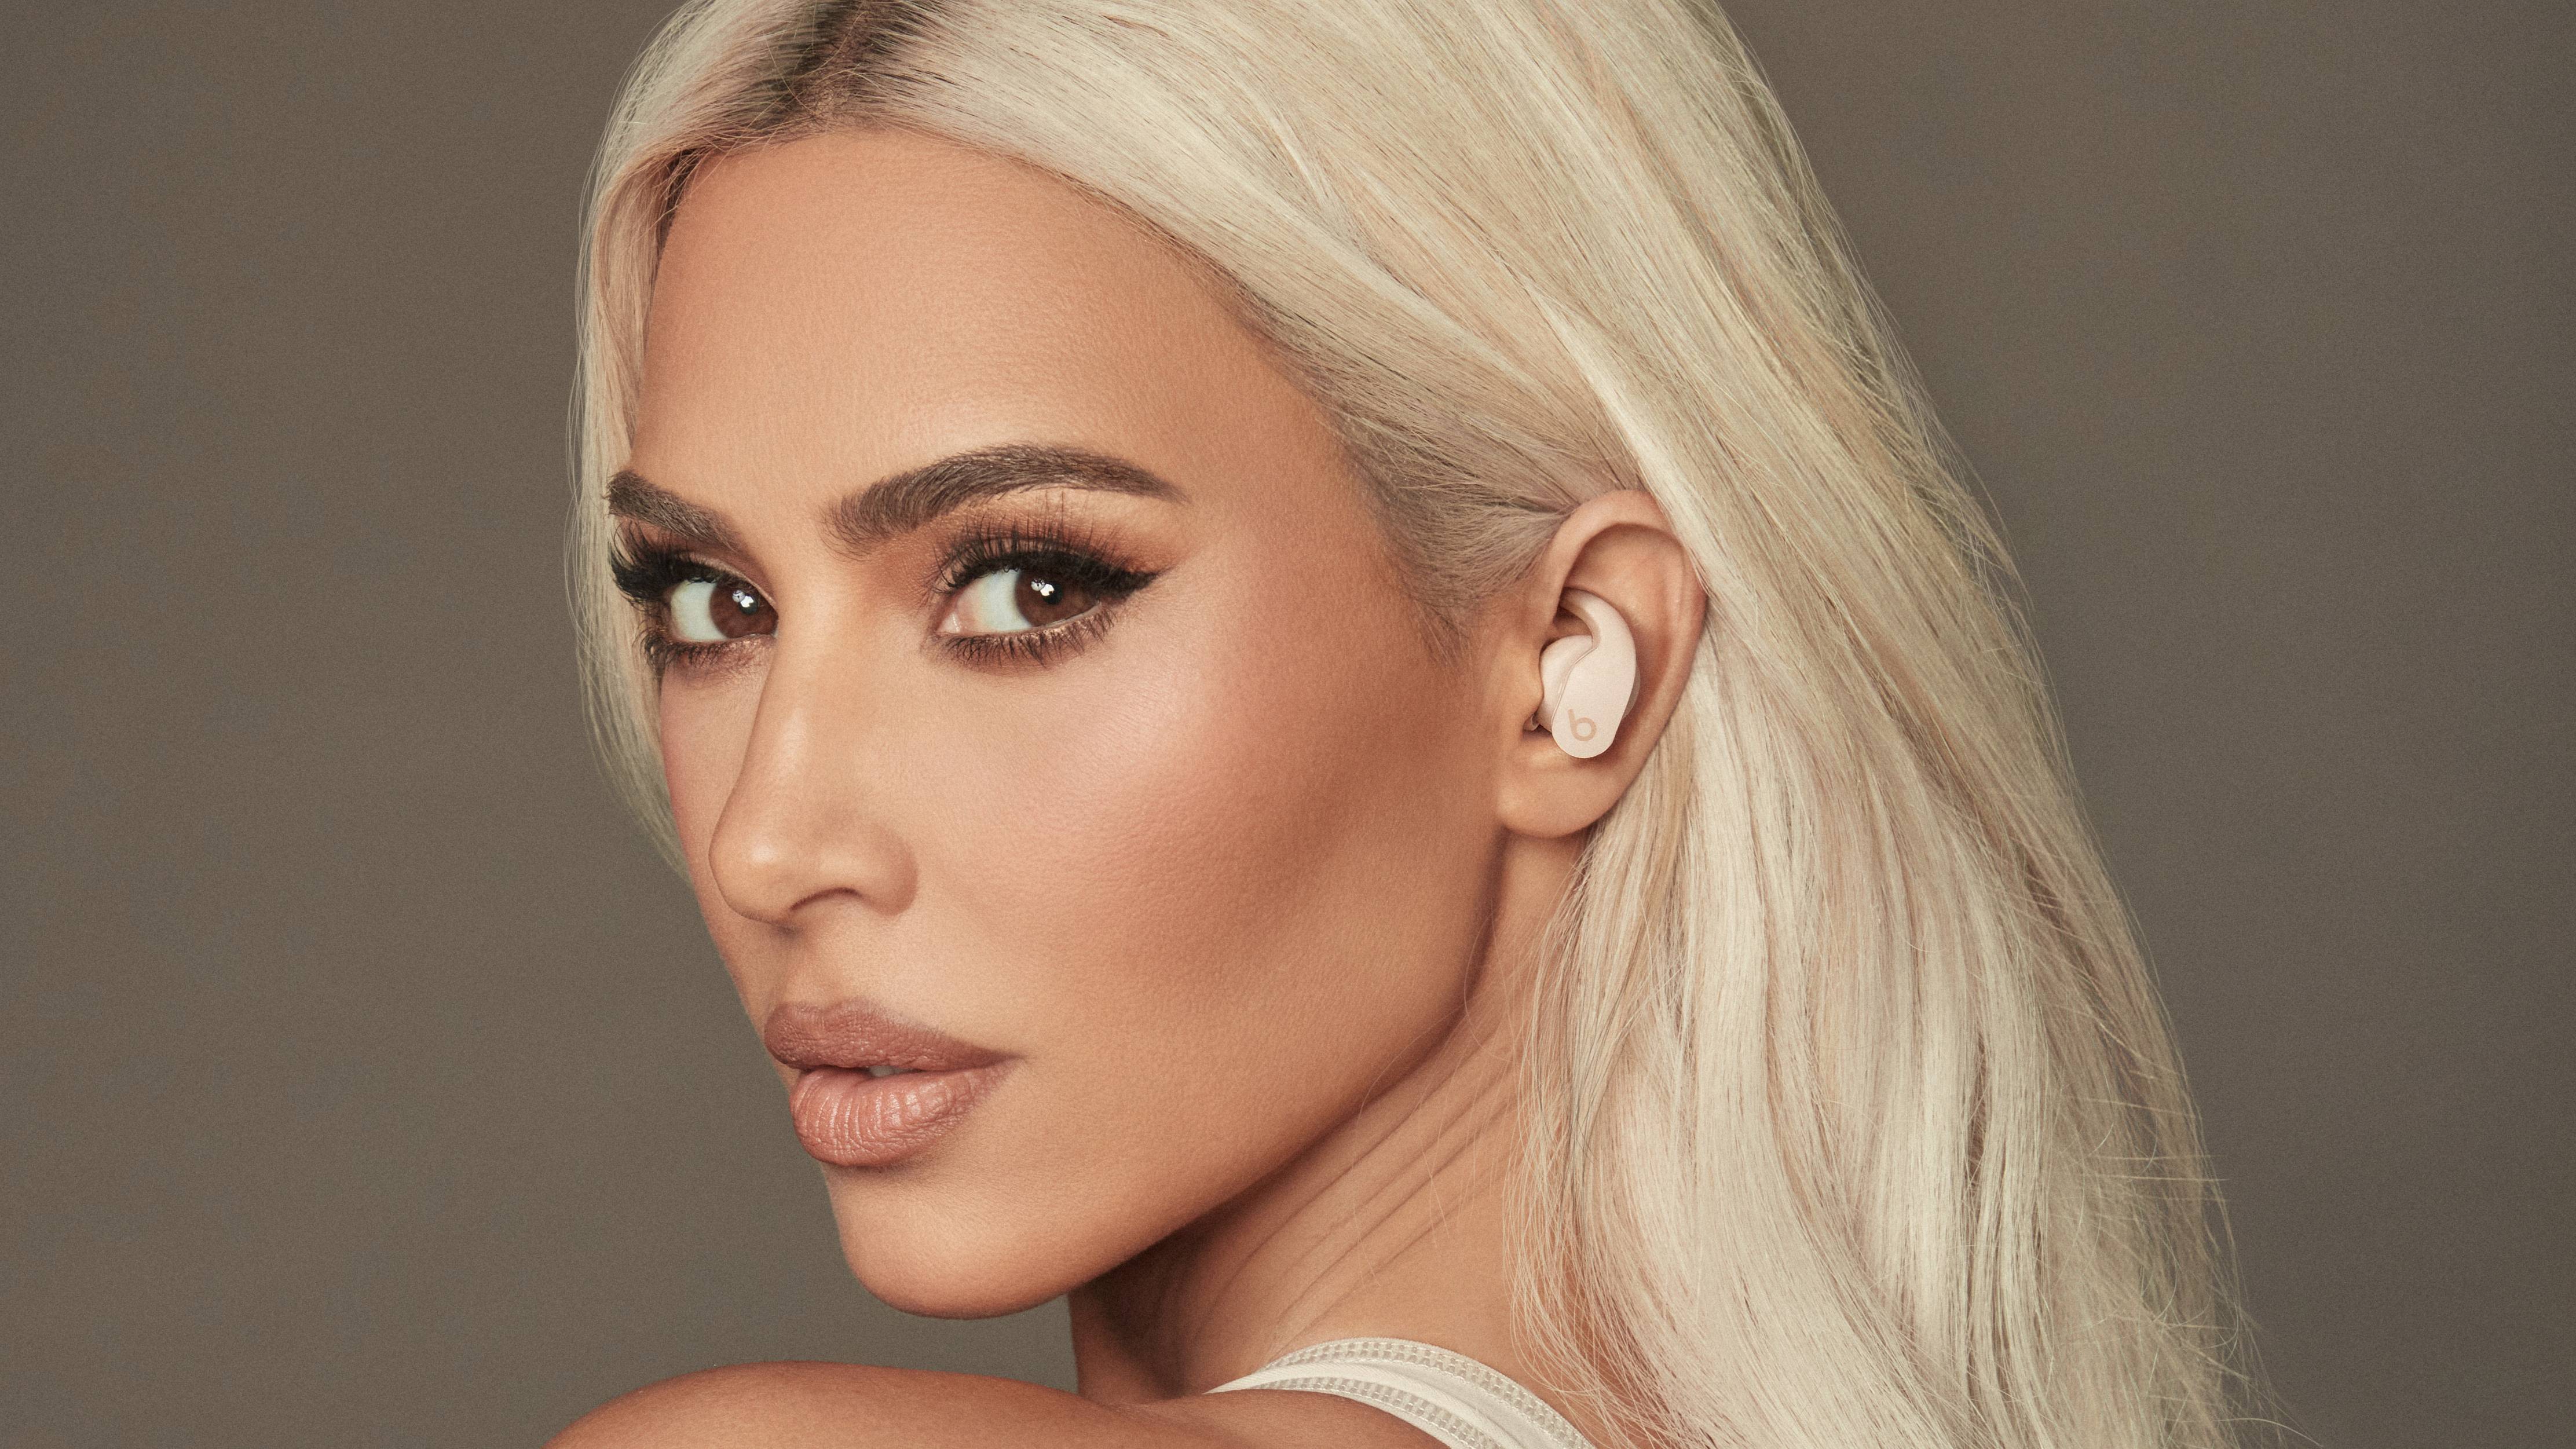 Kim Kardashian launch skin-colored Fit Pro earbuds | CNN Underscored